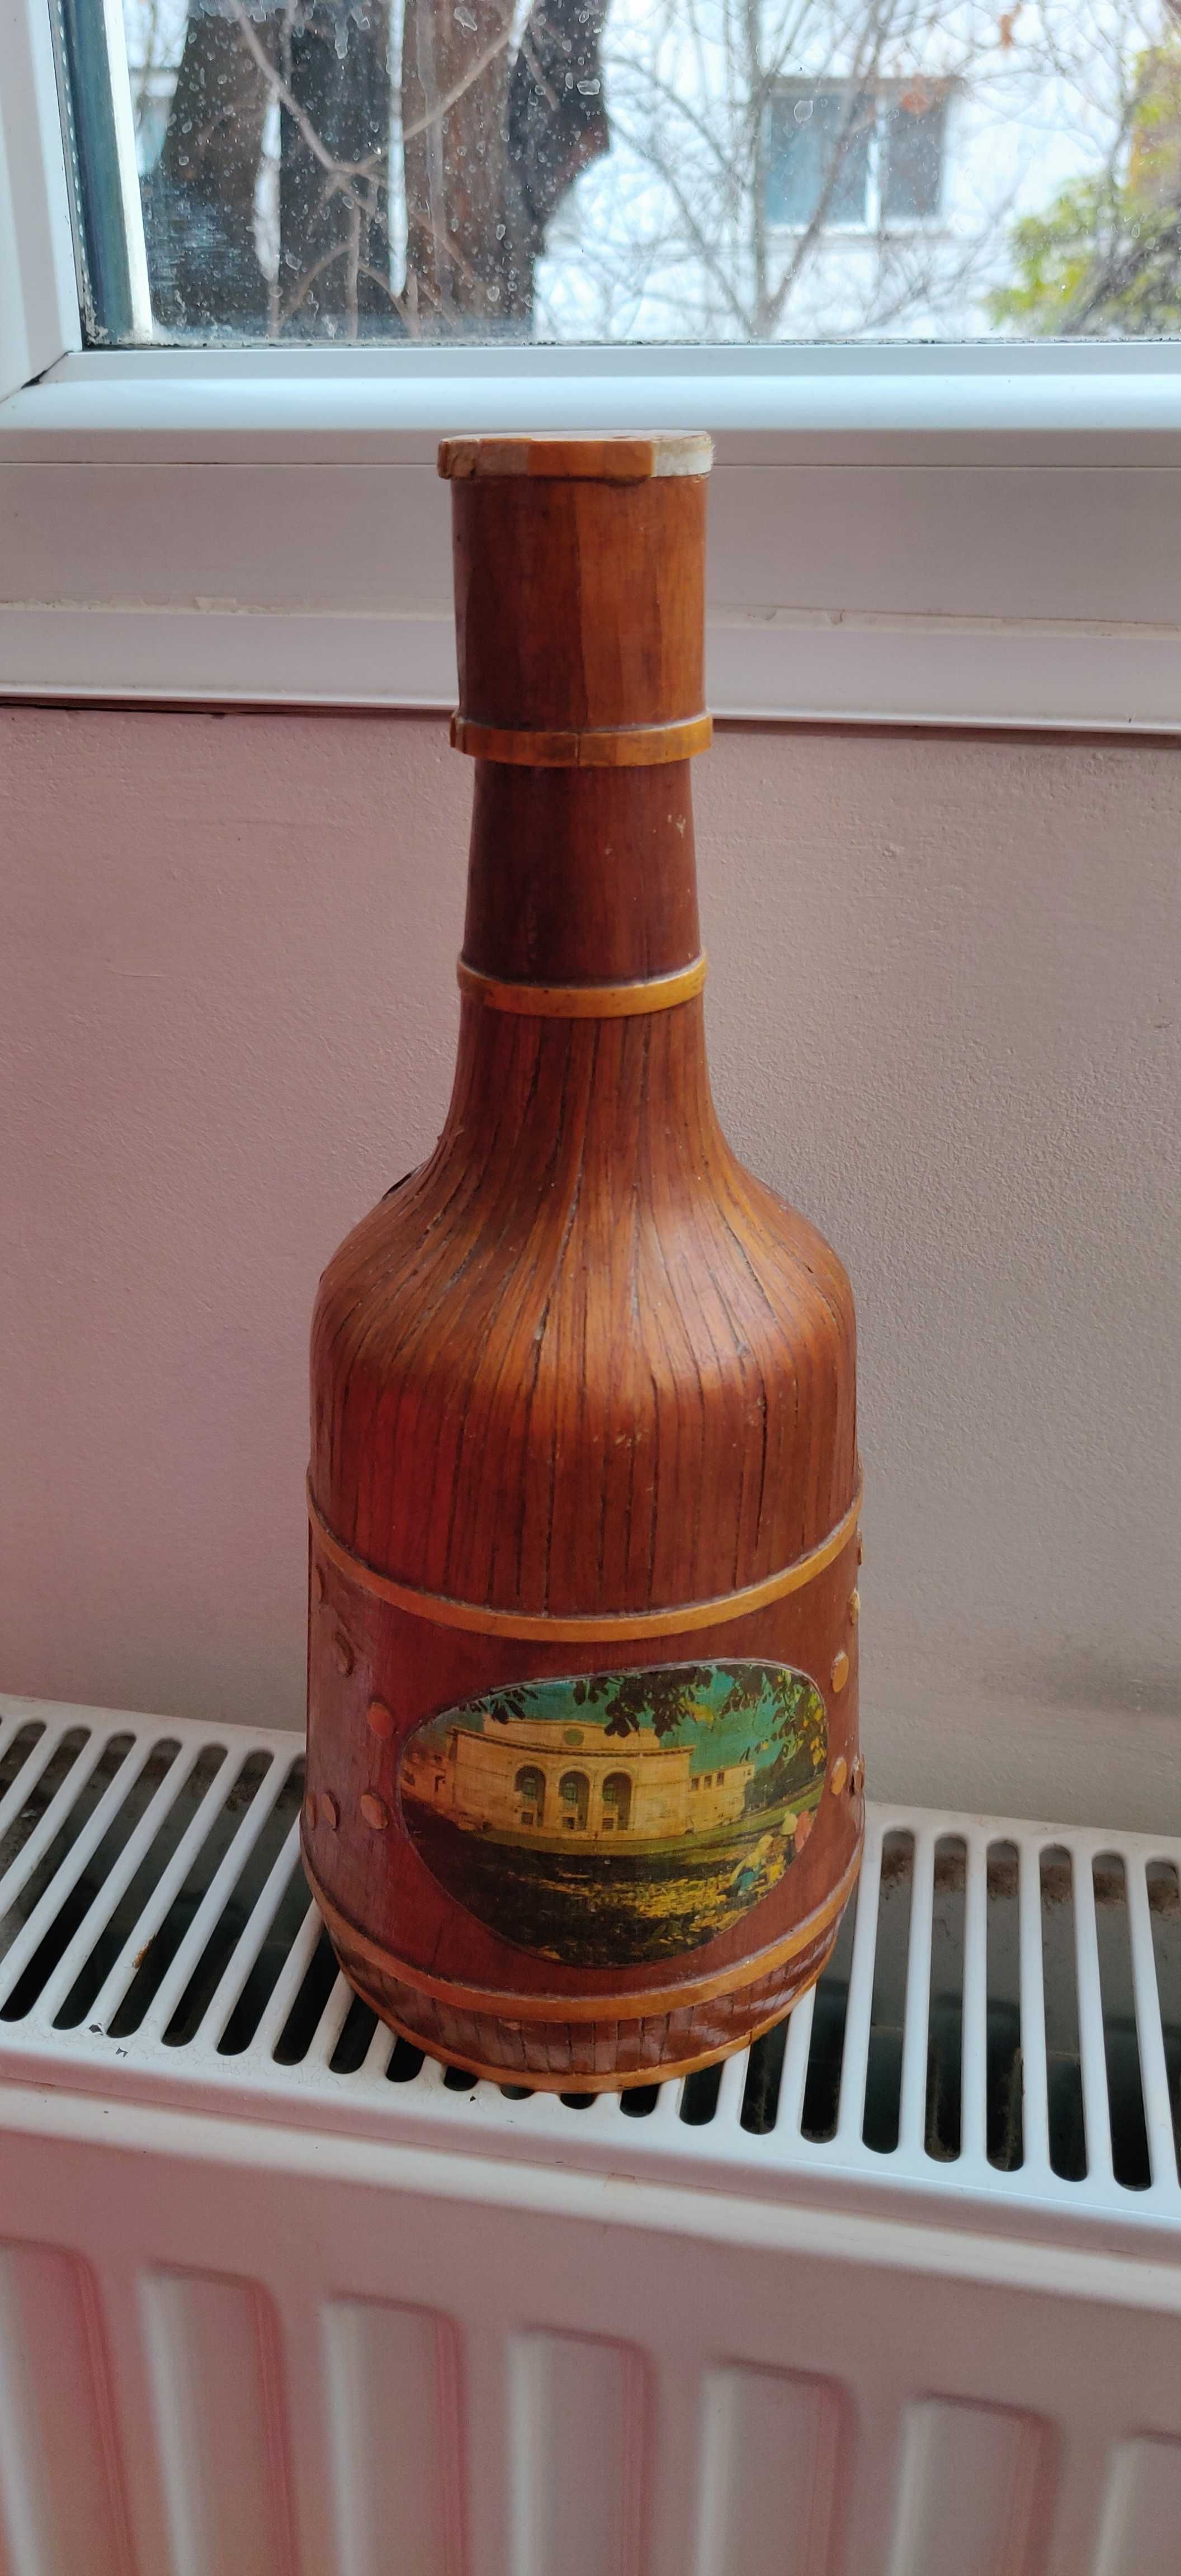 Sticla veche imbracata in lemn Cotnari